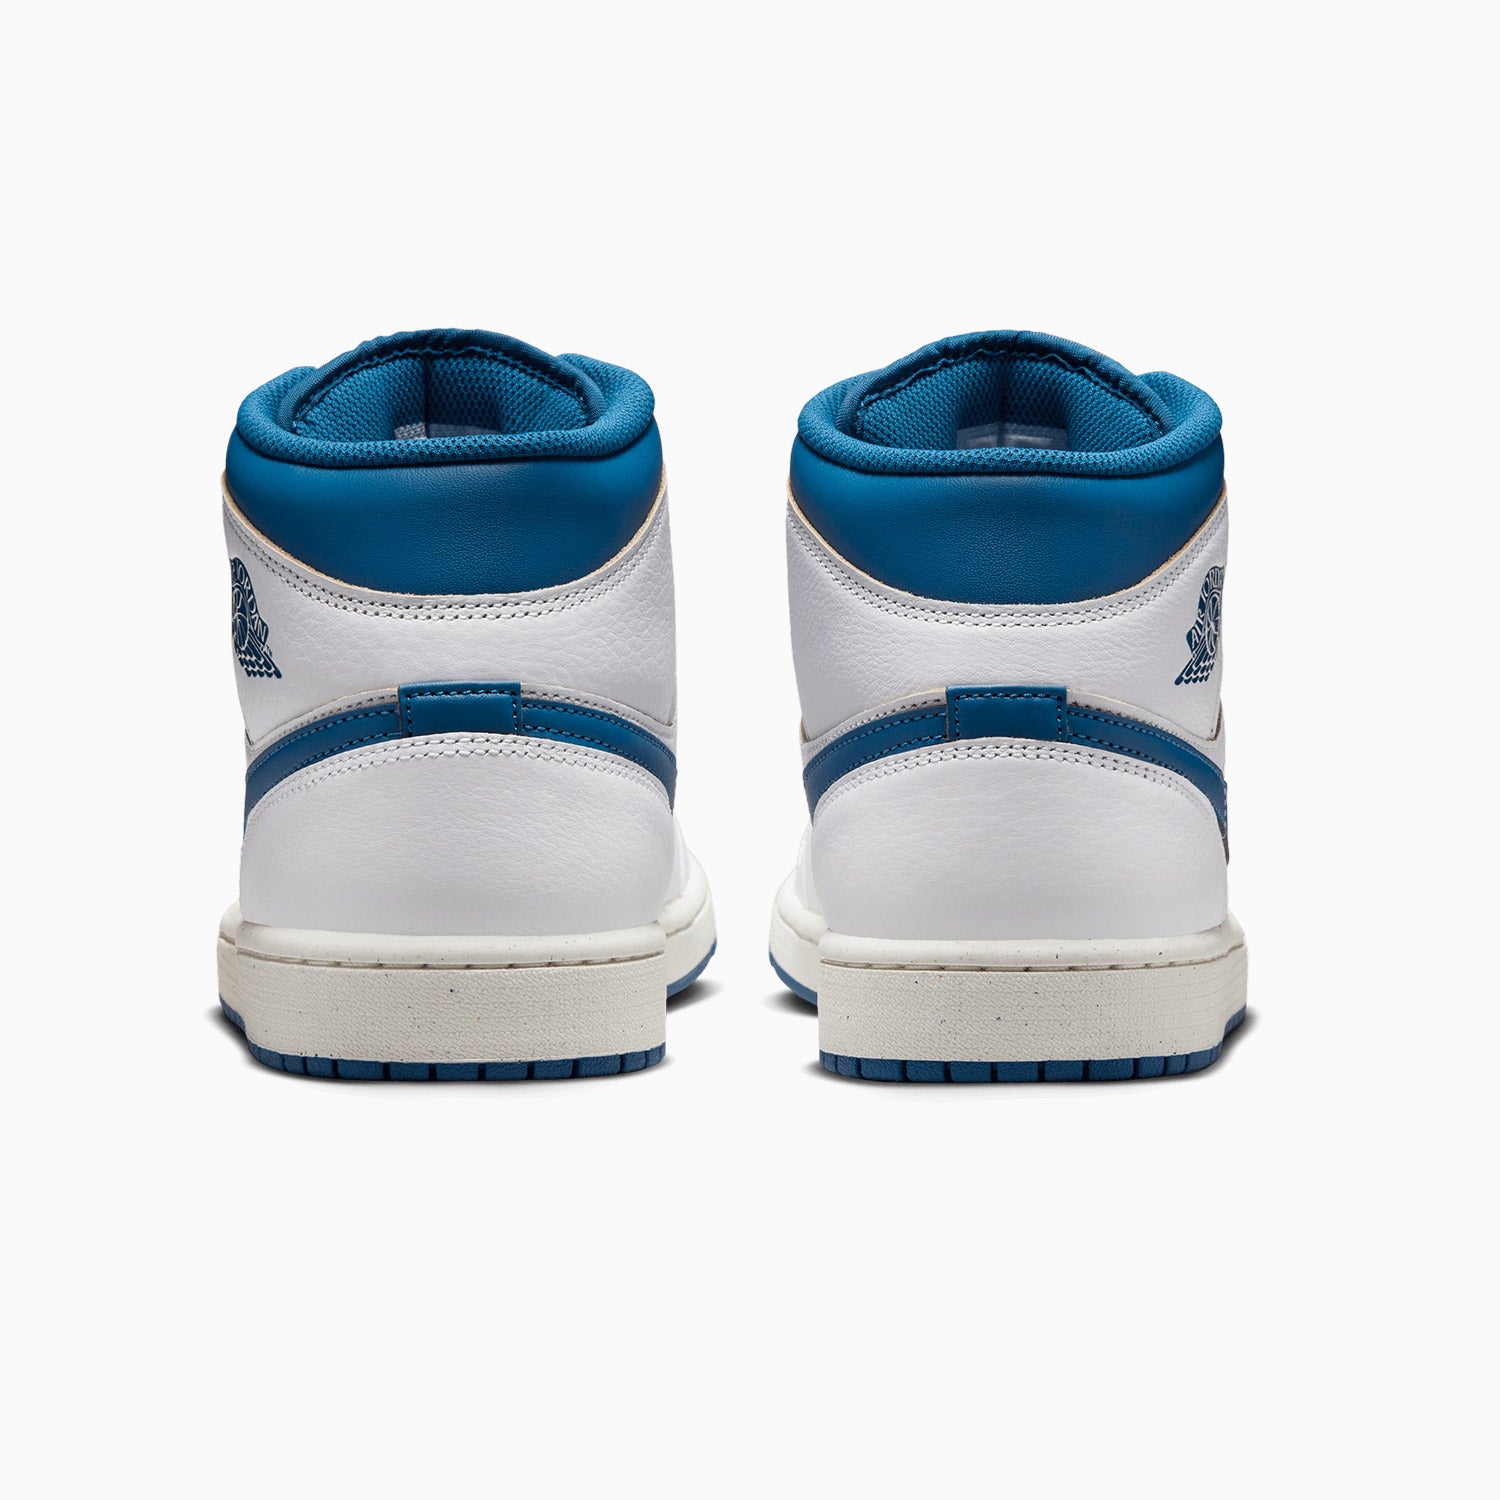 mens-air-jordan-1-se-industrial-blue-shoes-fn5215-141